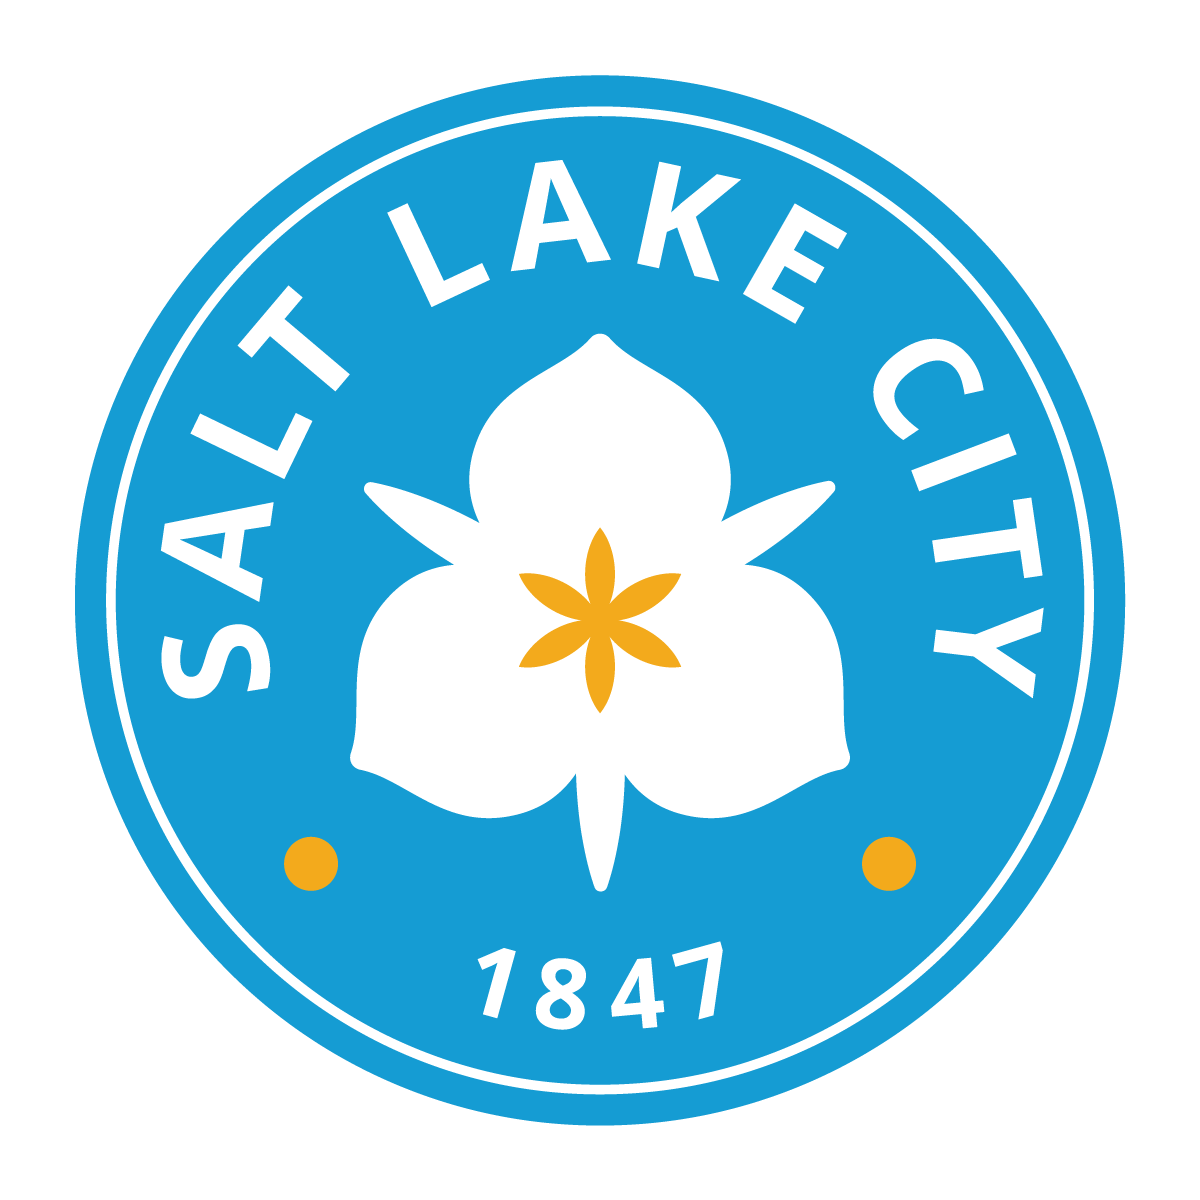 Salt Lake City Corporation logo